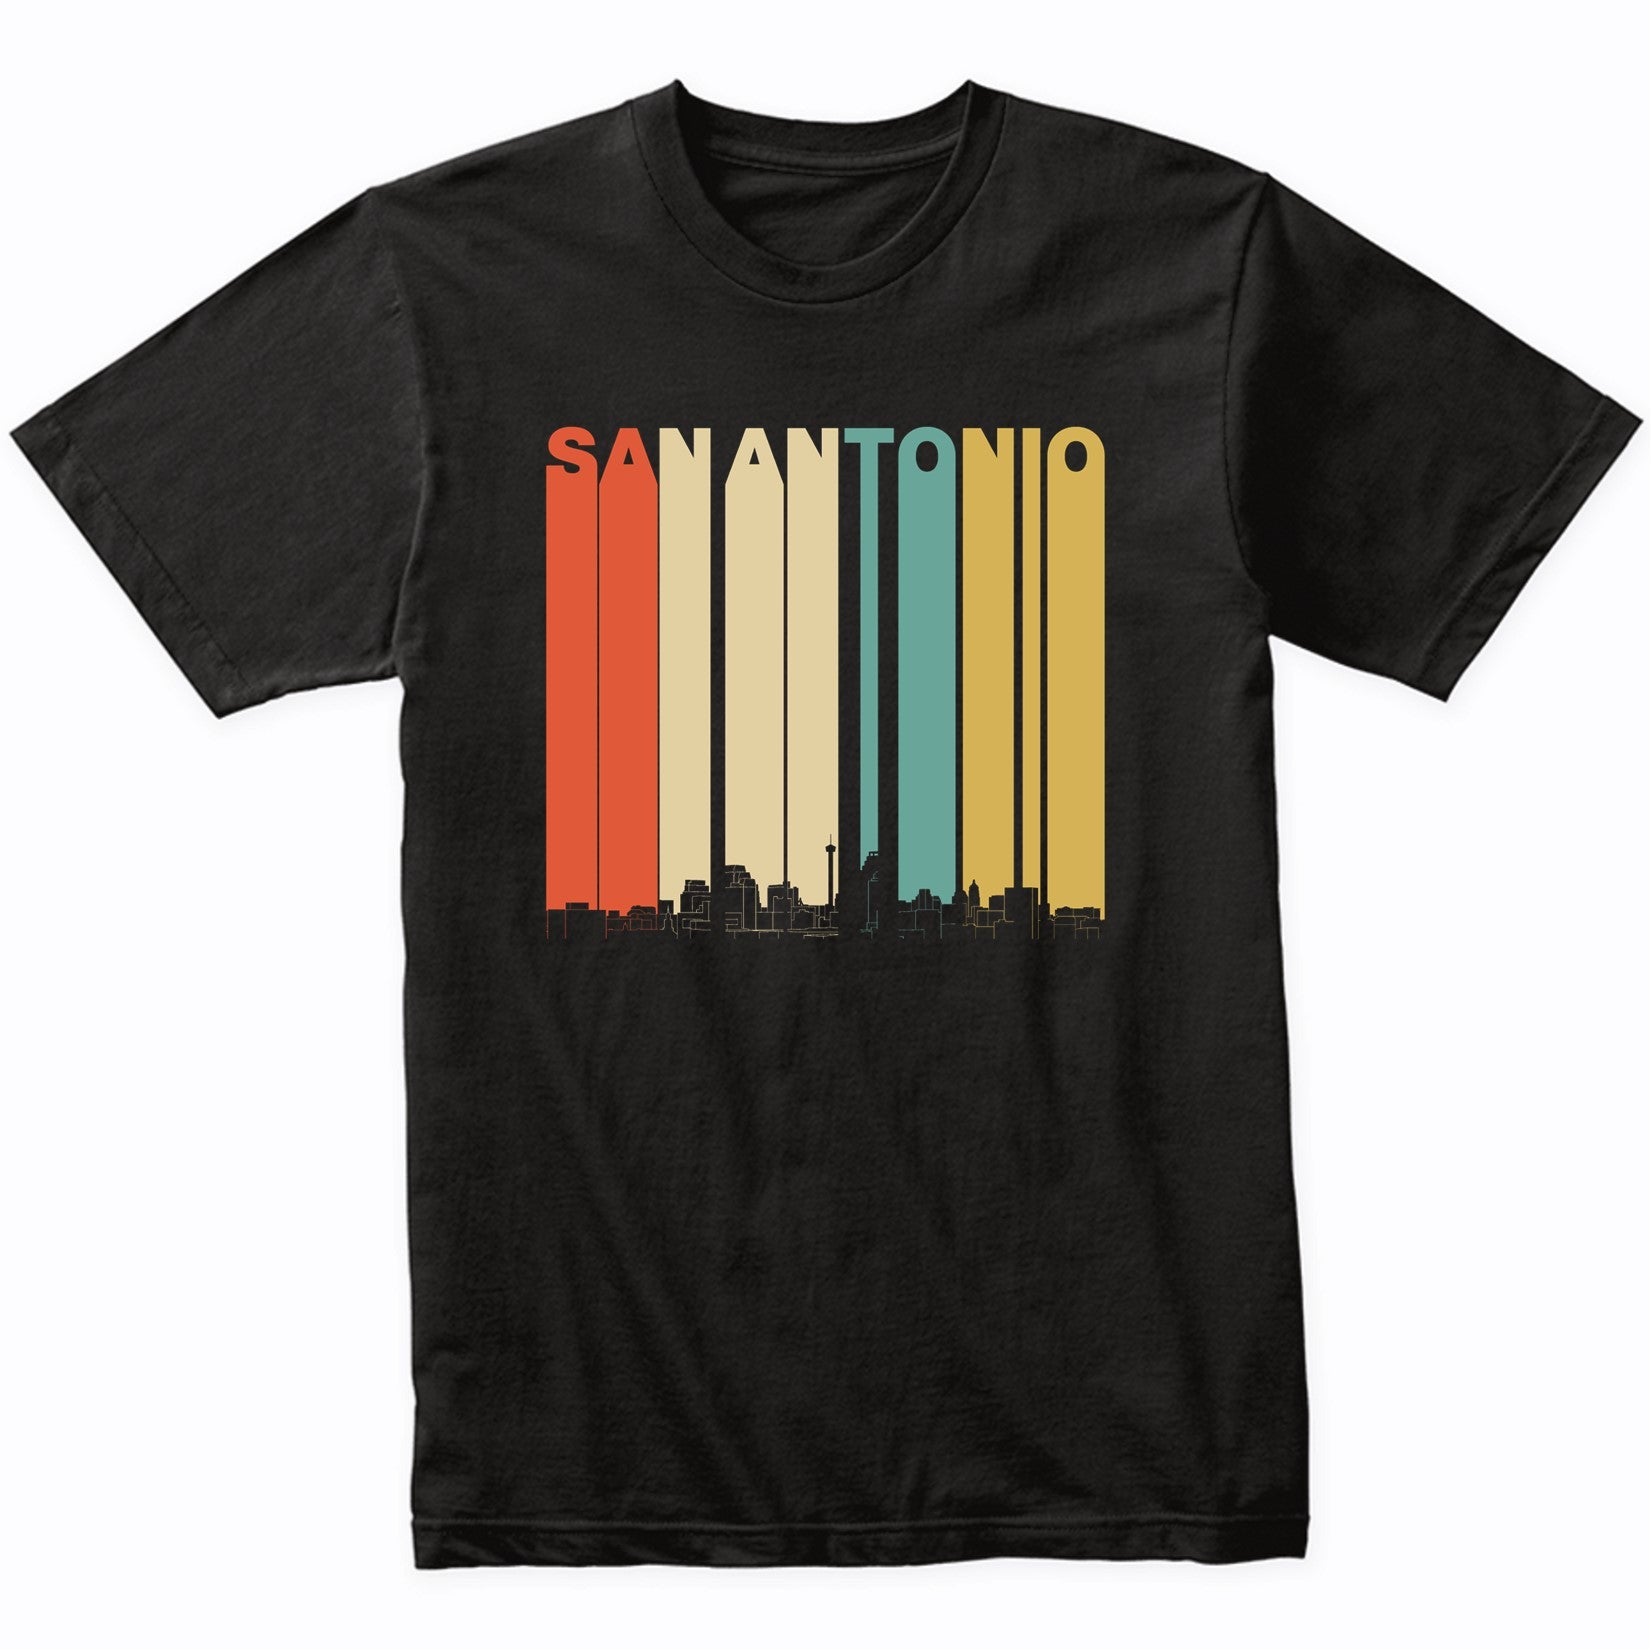 Vintage 1970's Style San Antonio Texas Skyline T-Shirt